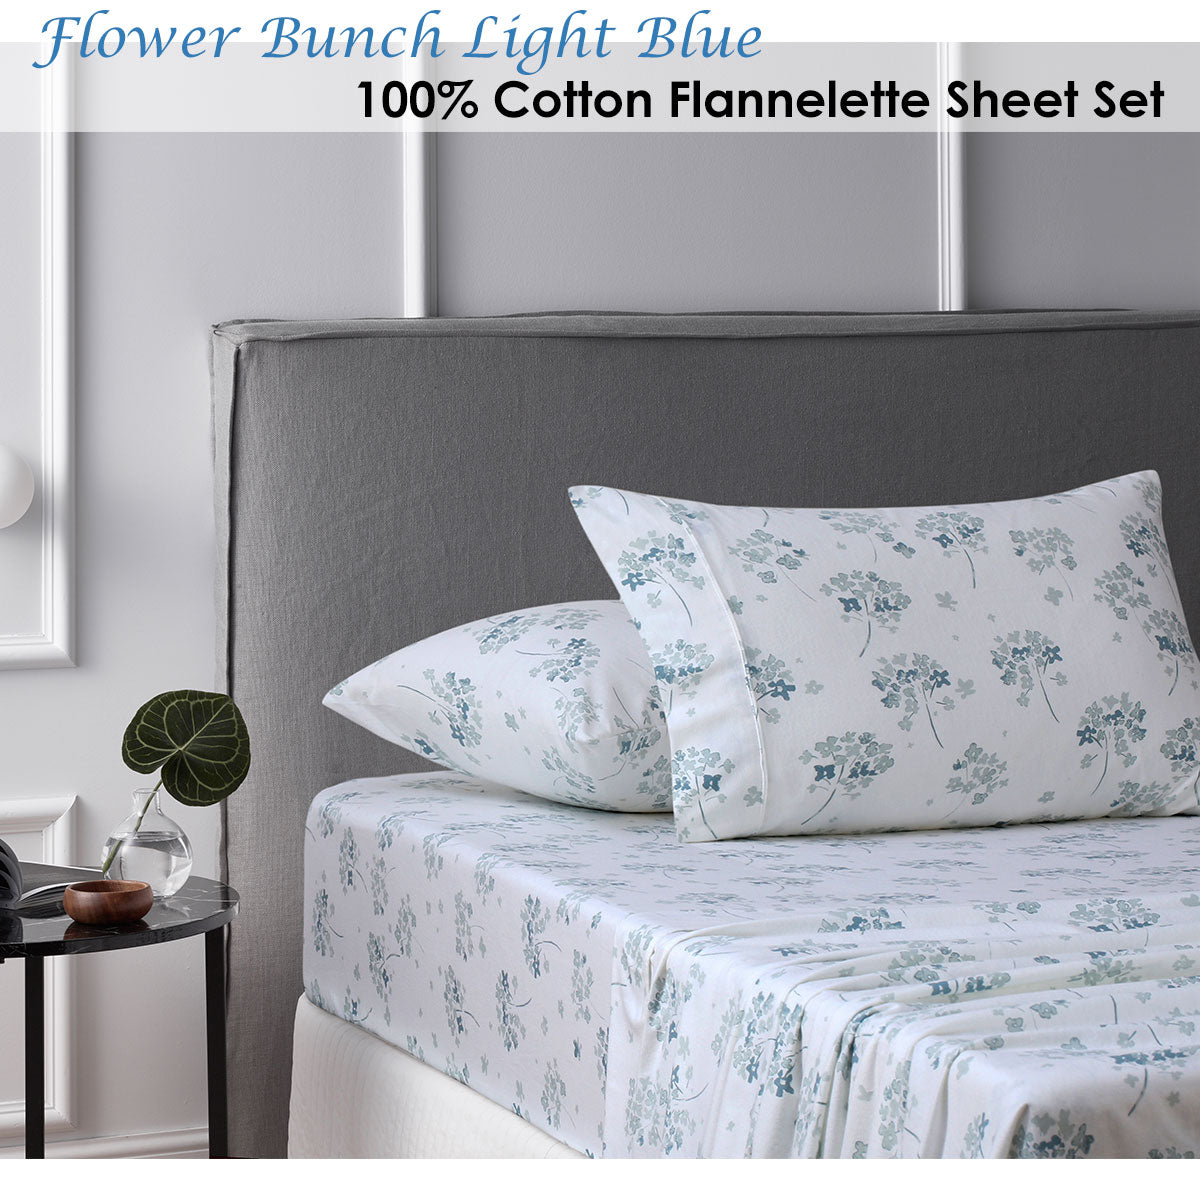 KING Accessorize Cotton Flannelette Sheet Set Flower - Light Blue  King